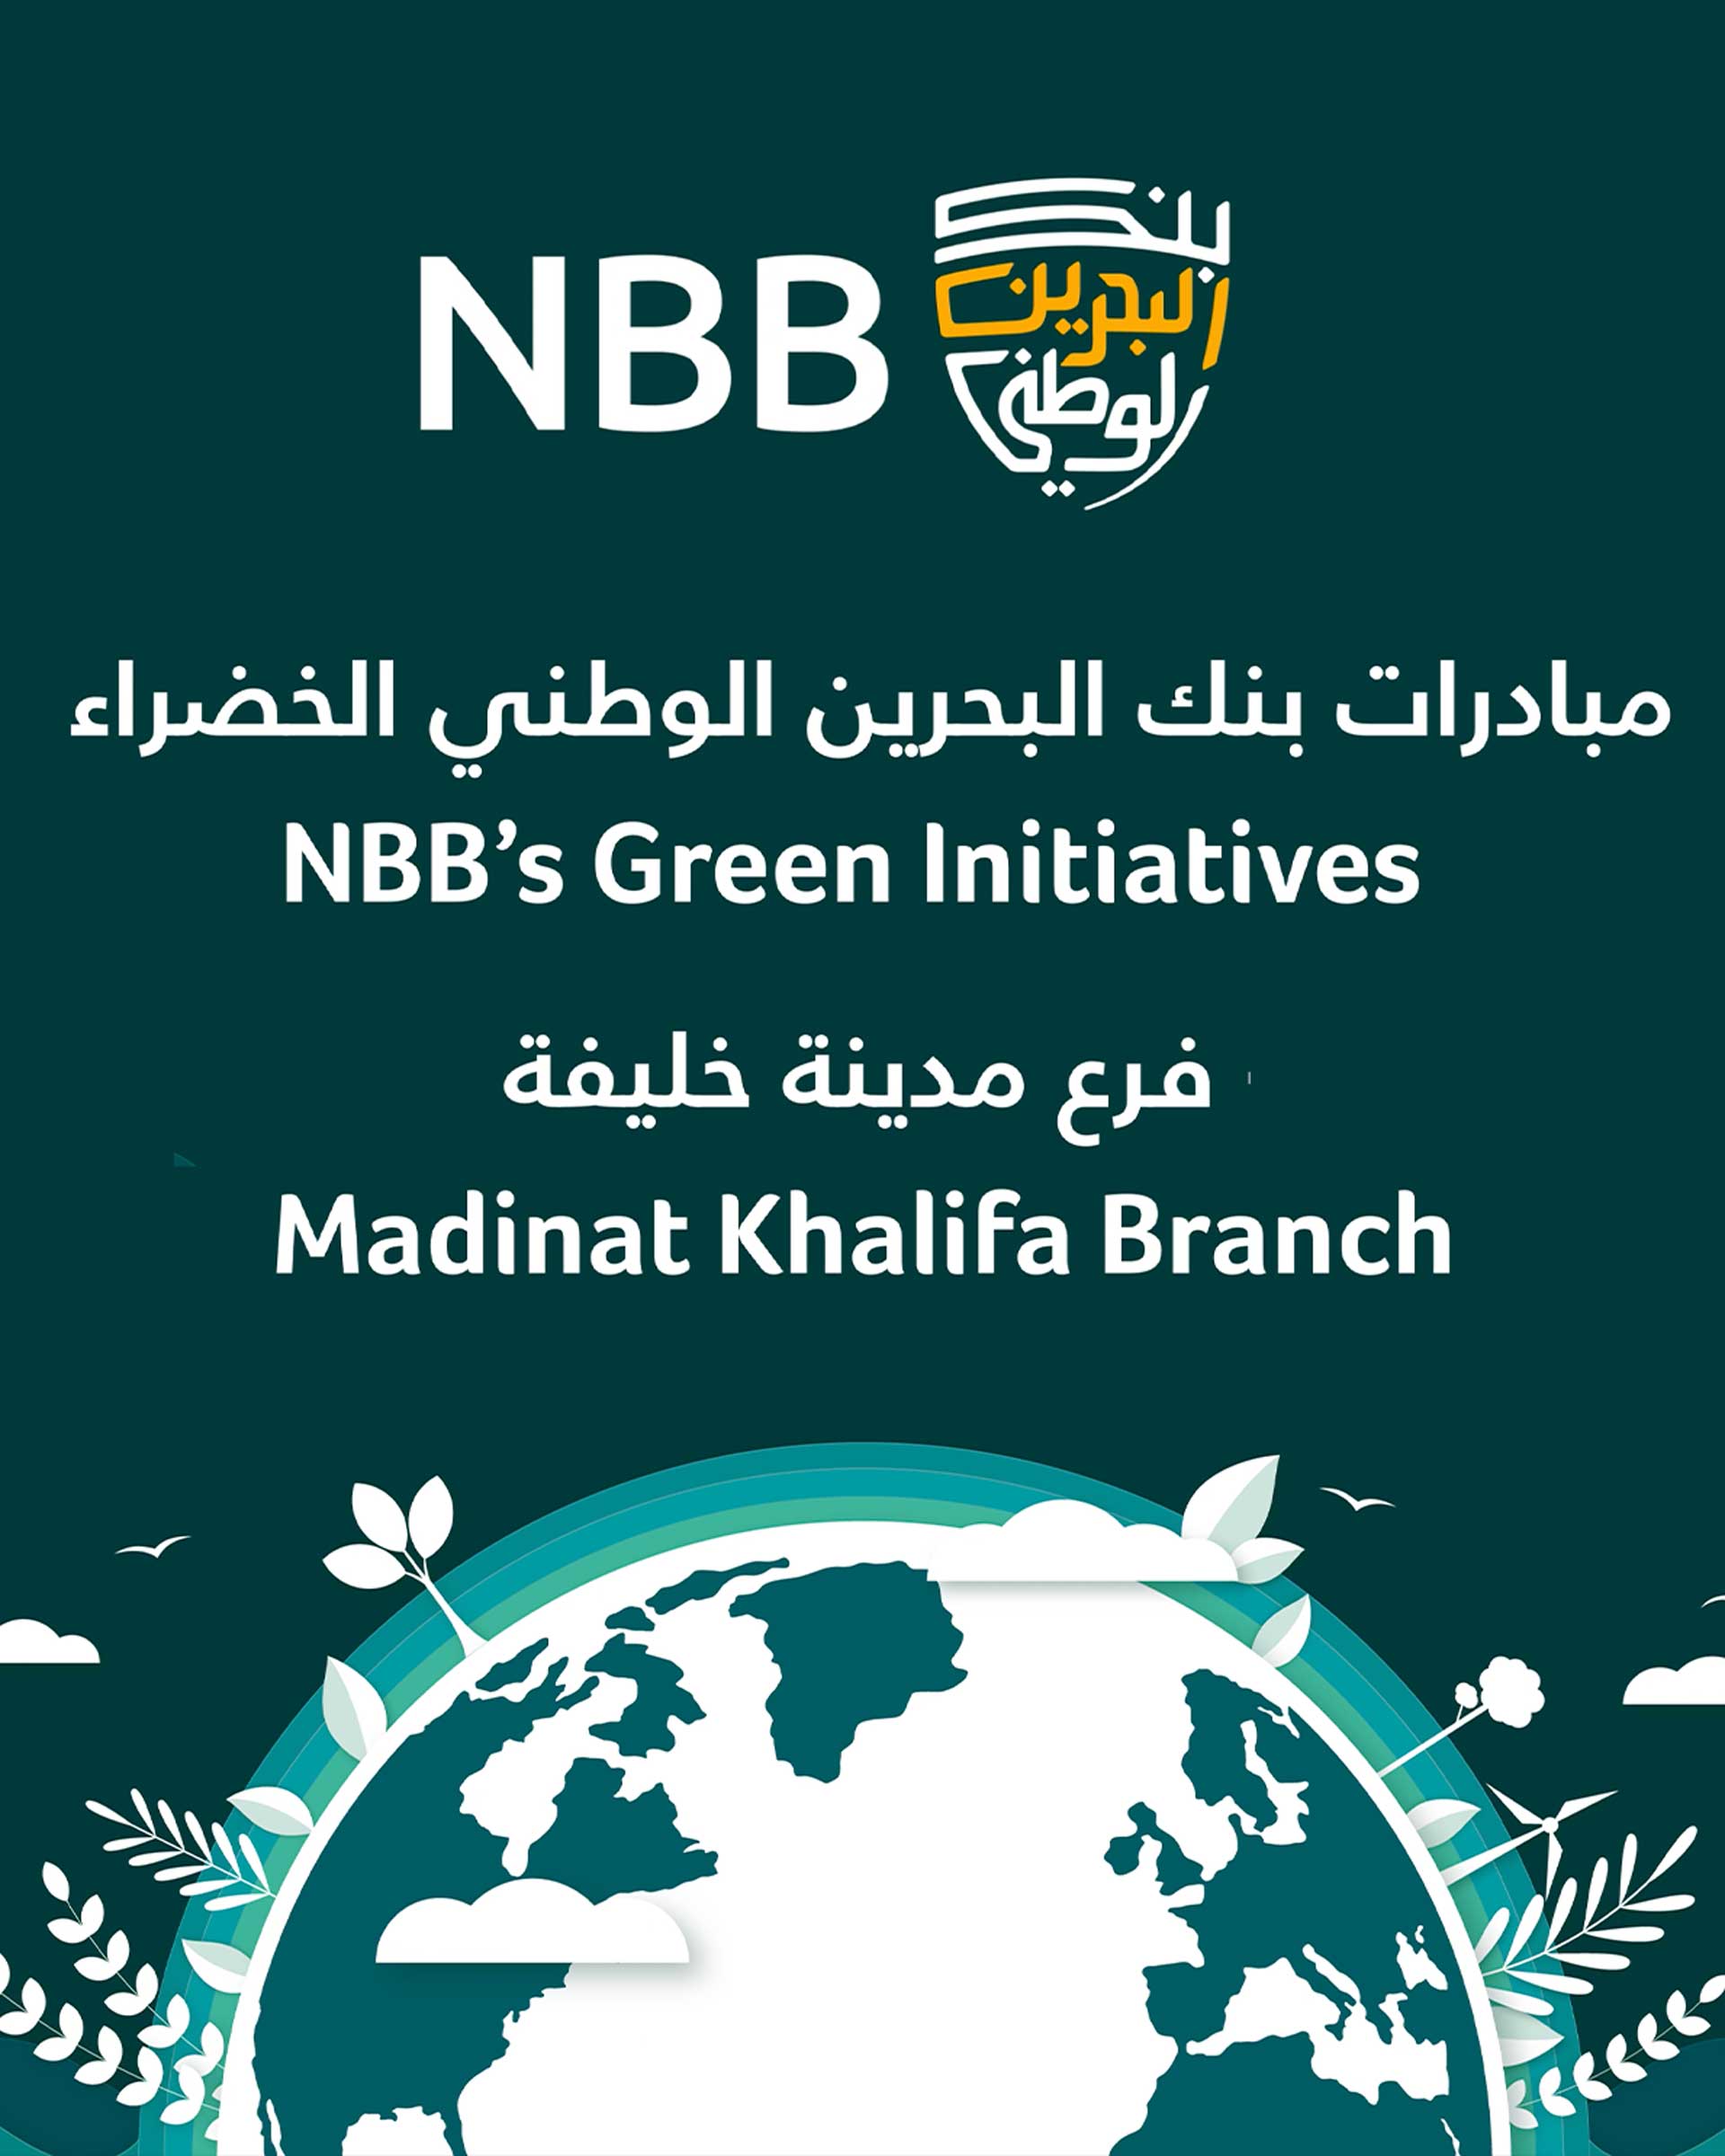 NBB Green initiatives Video